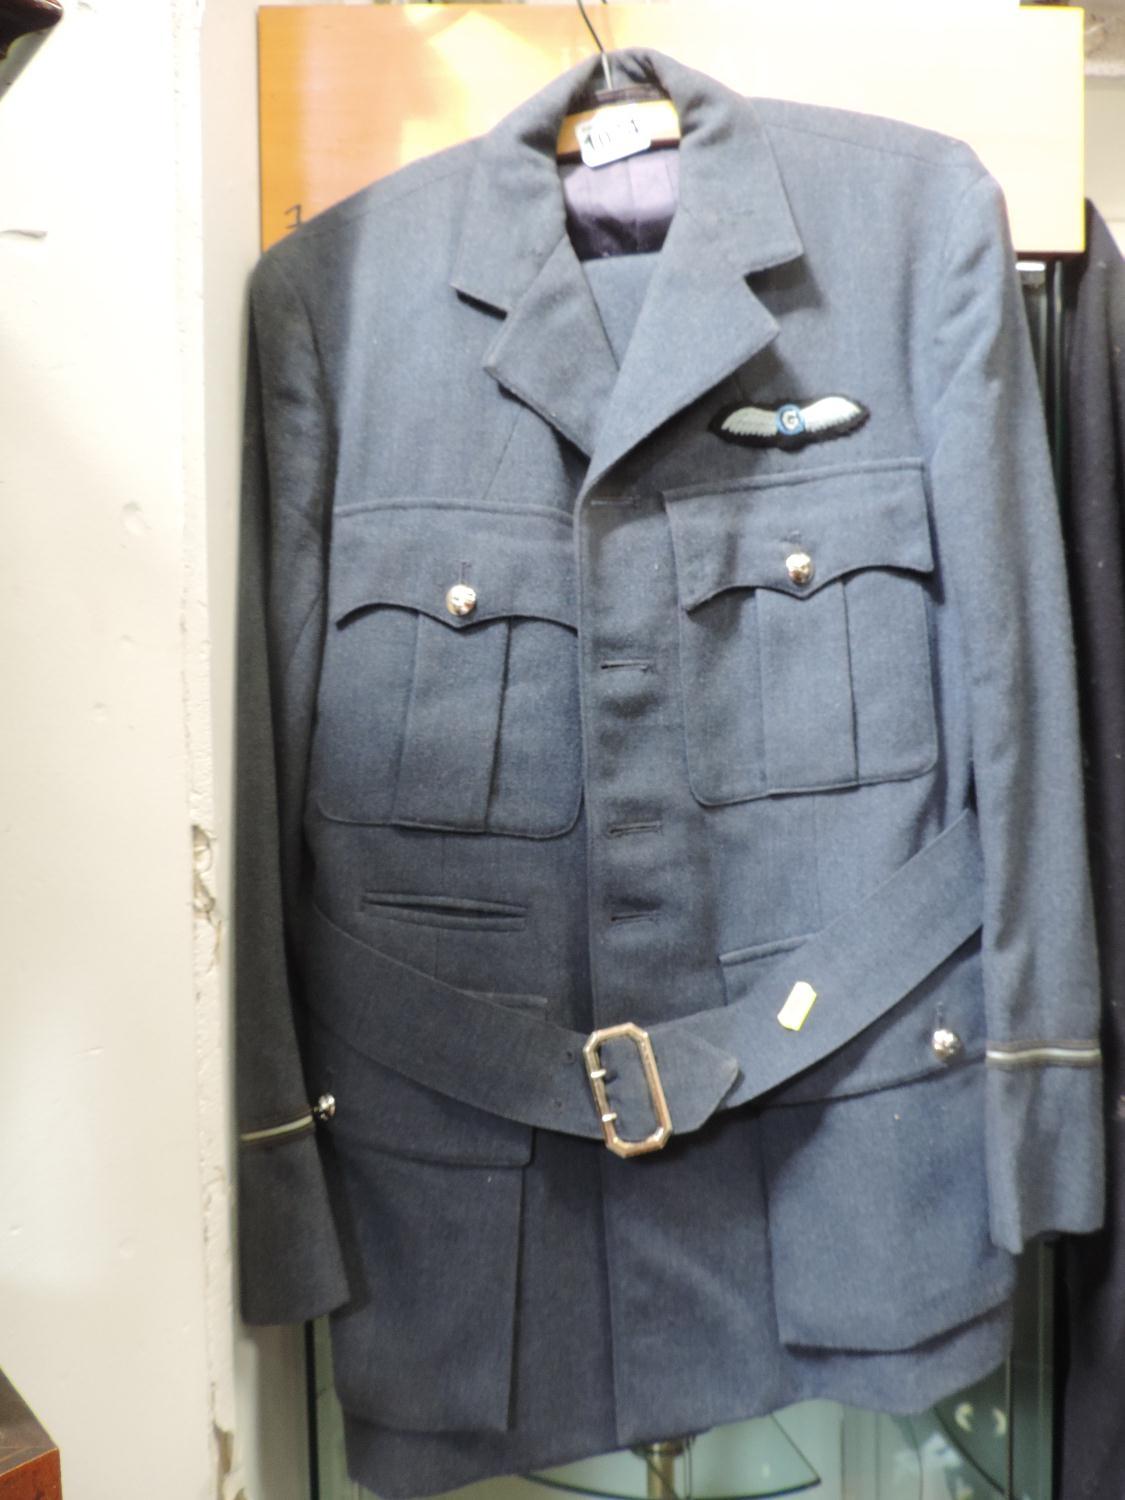 RAF Uniform